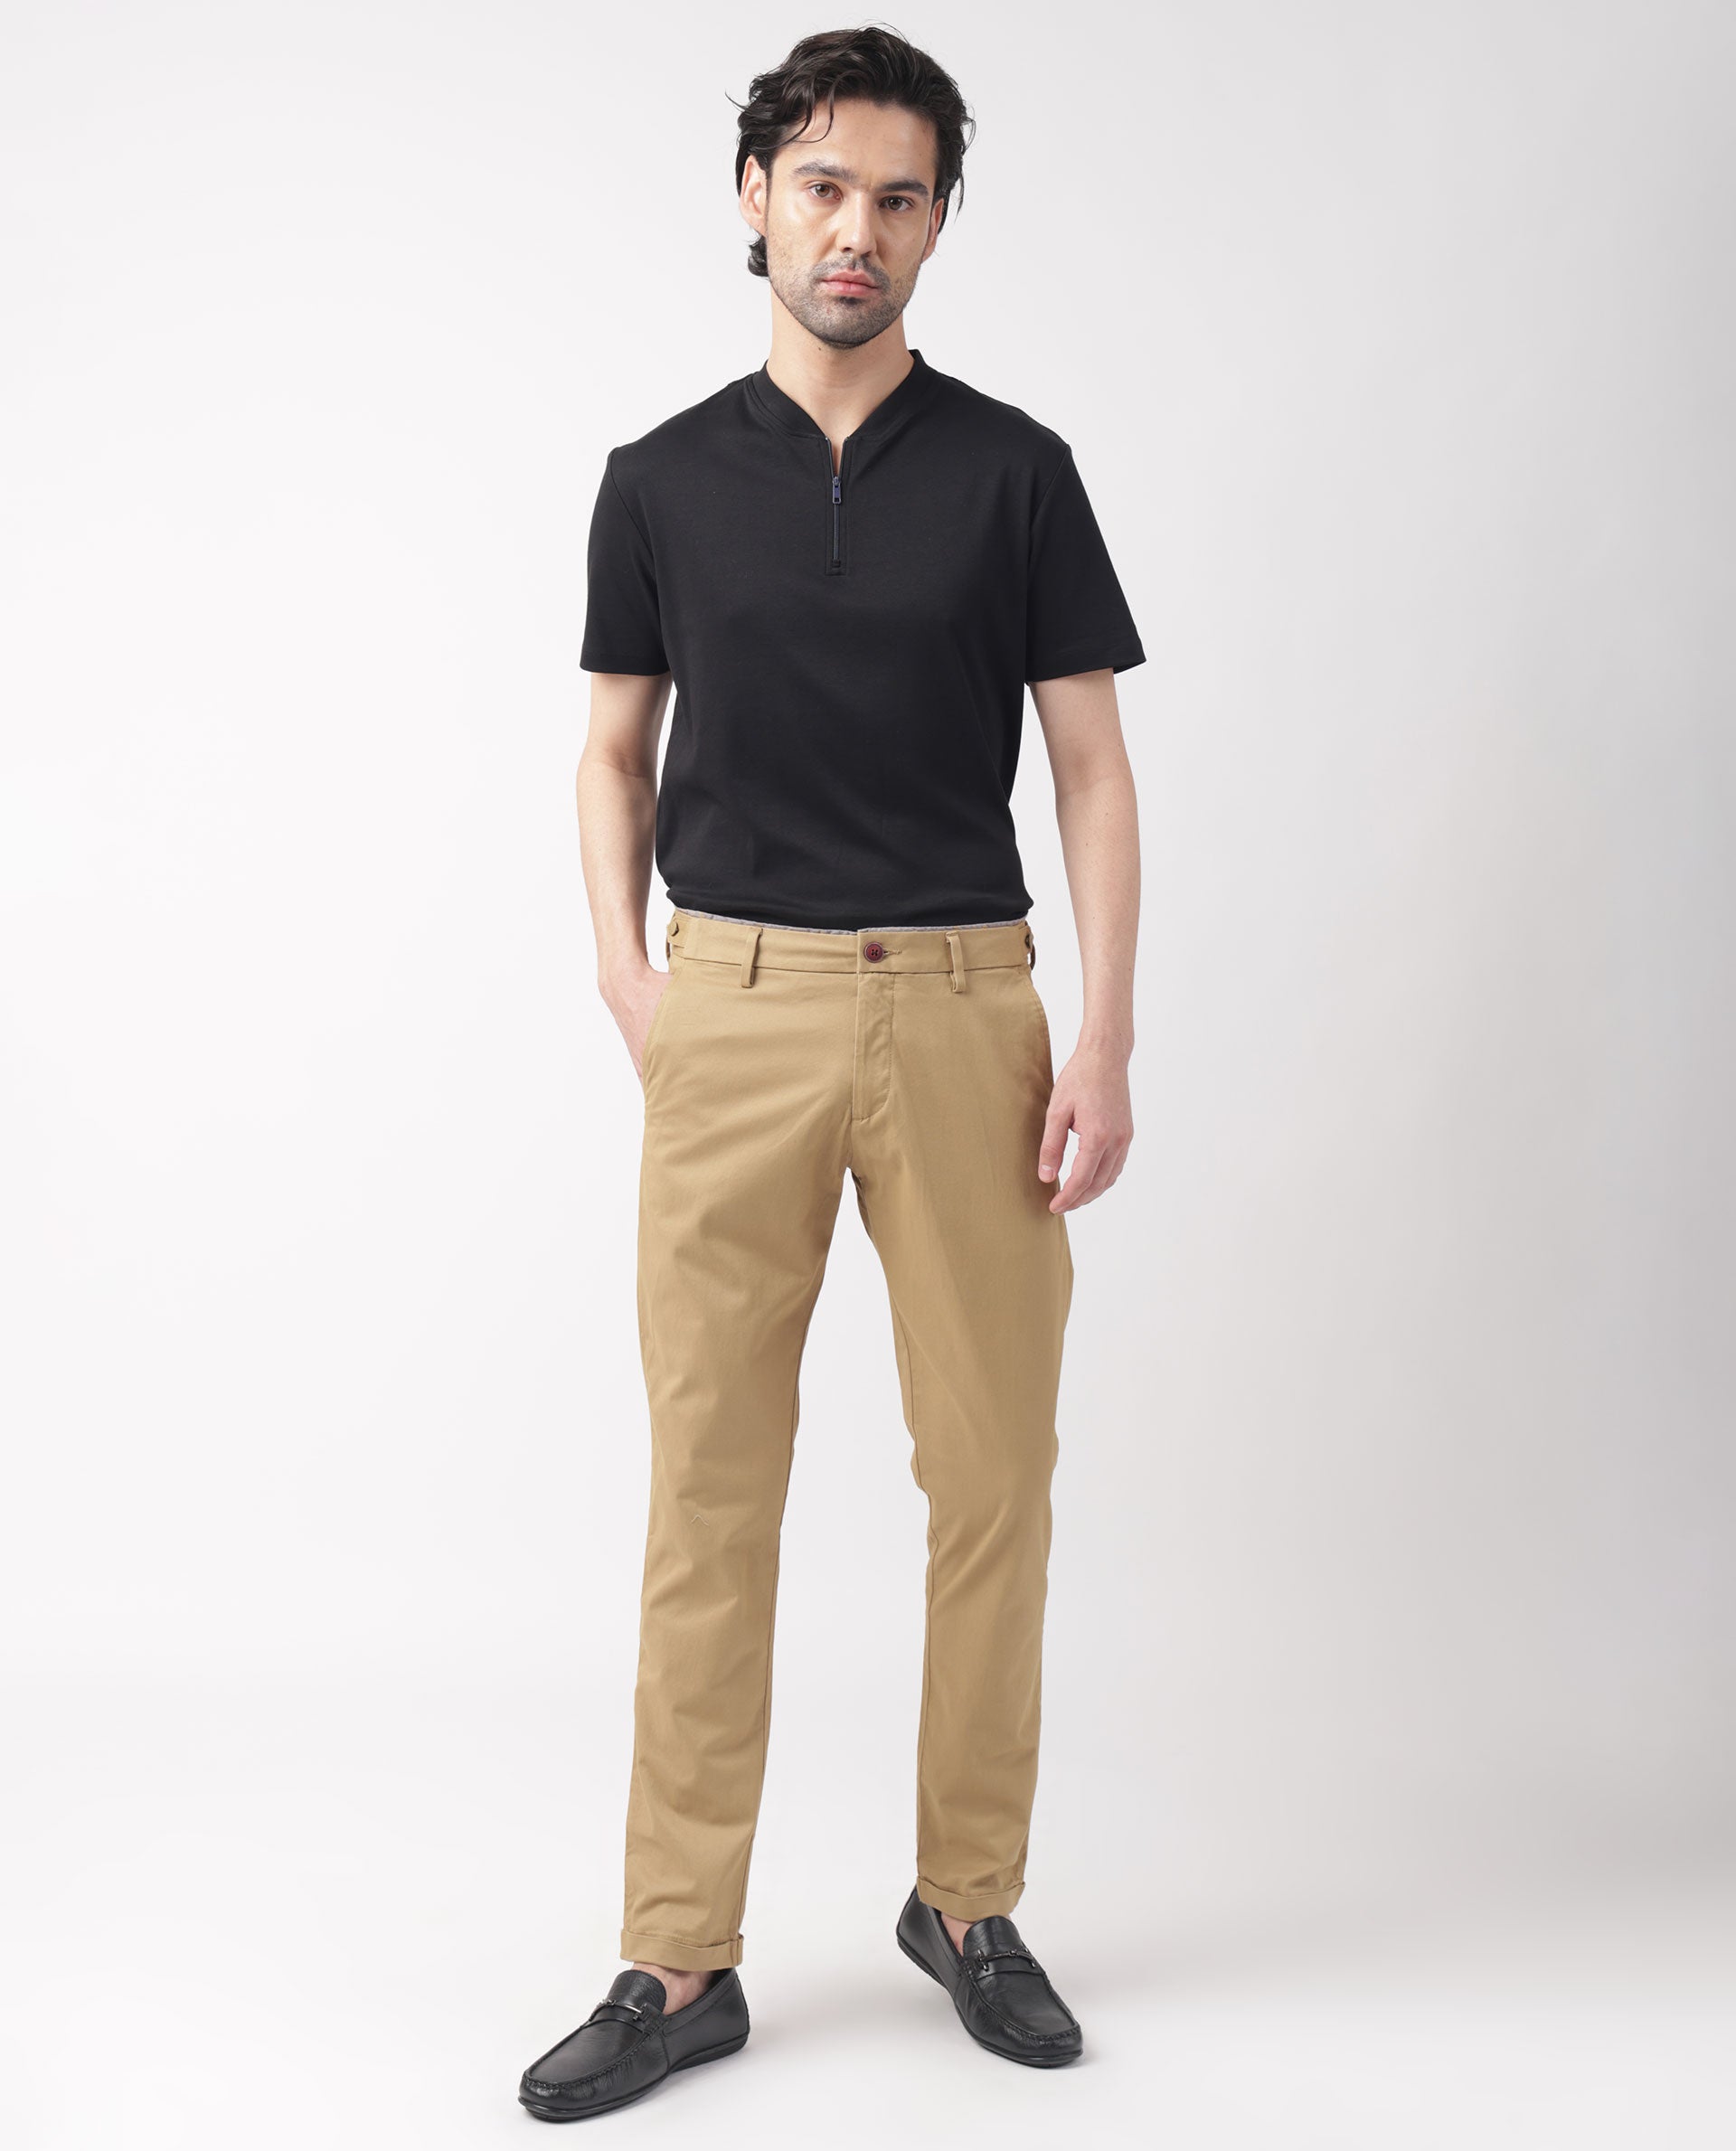 Buy Khaki Track Pants for Men by The Indian Garage Co Online  Ajiocom